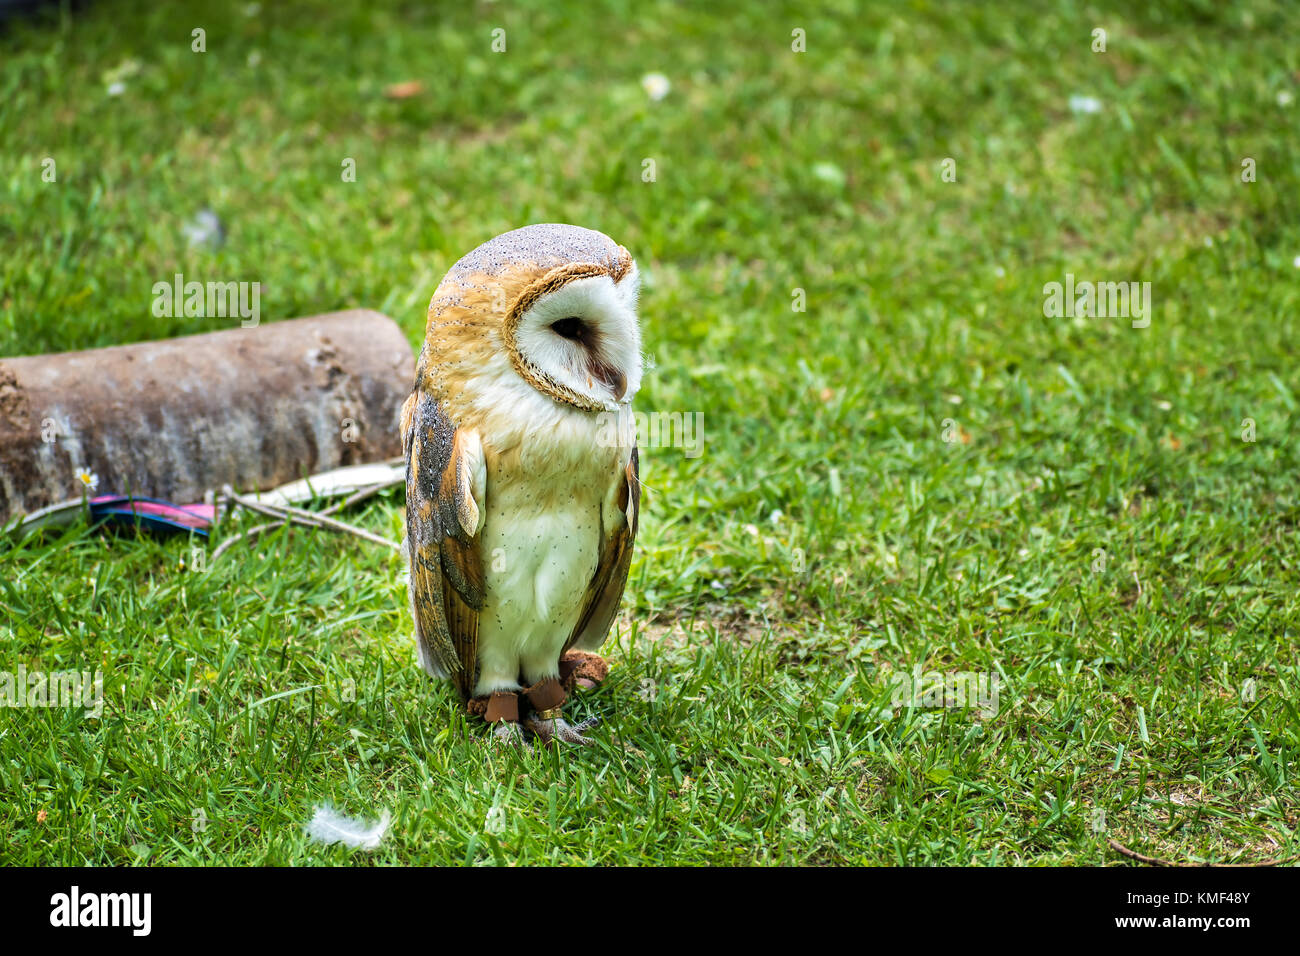 Barn owl (Tyto alba) on green grass – closeup portrait Stock Photo